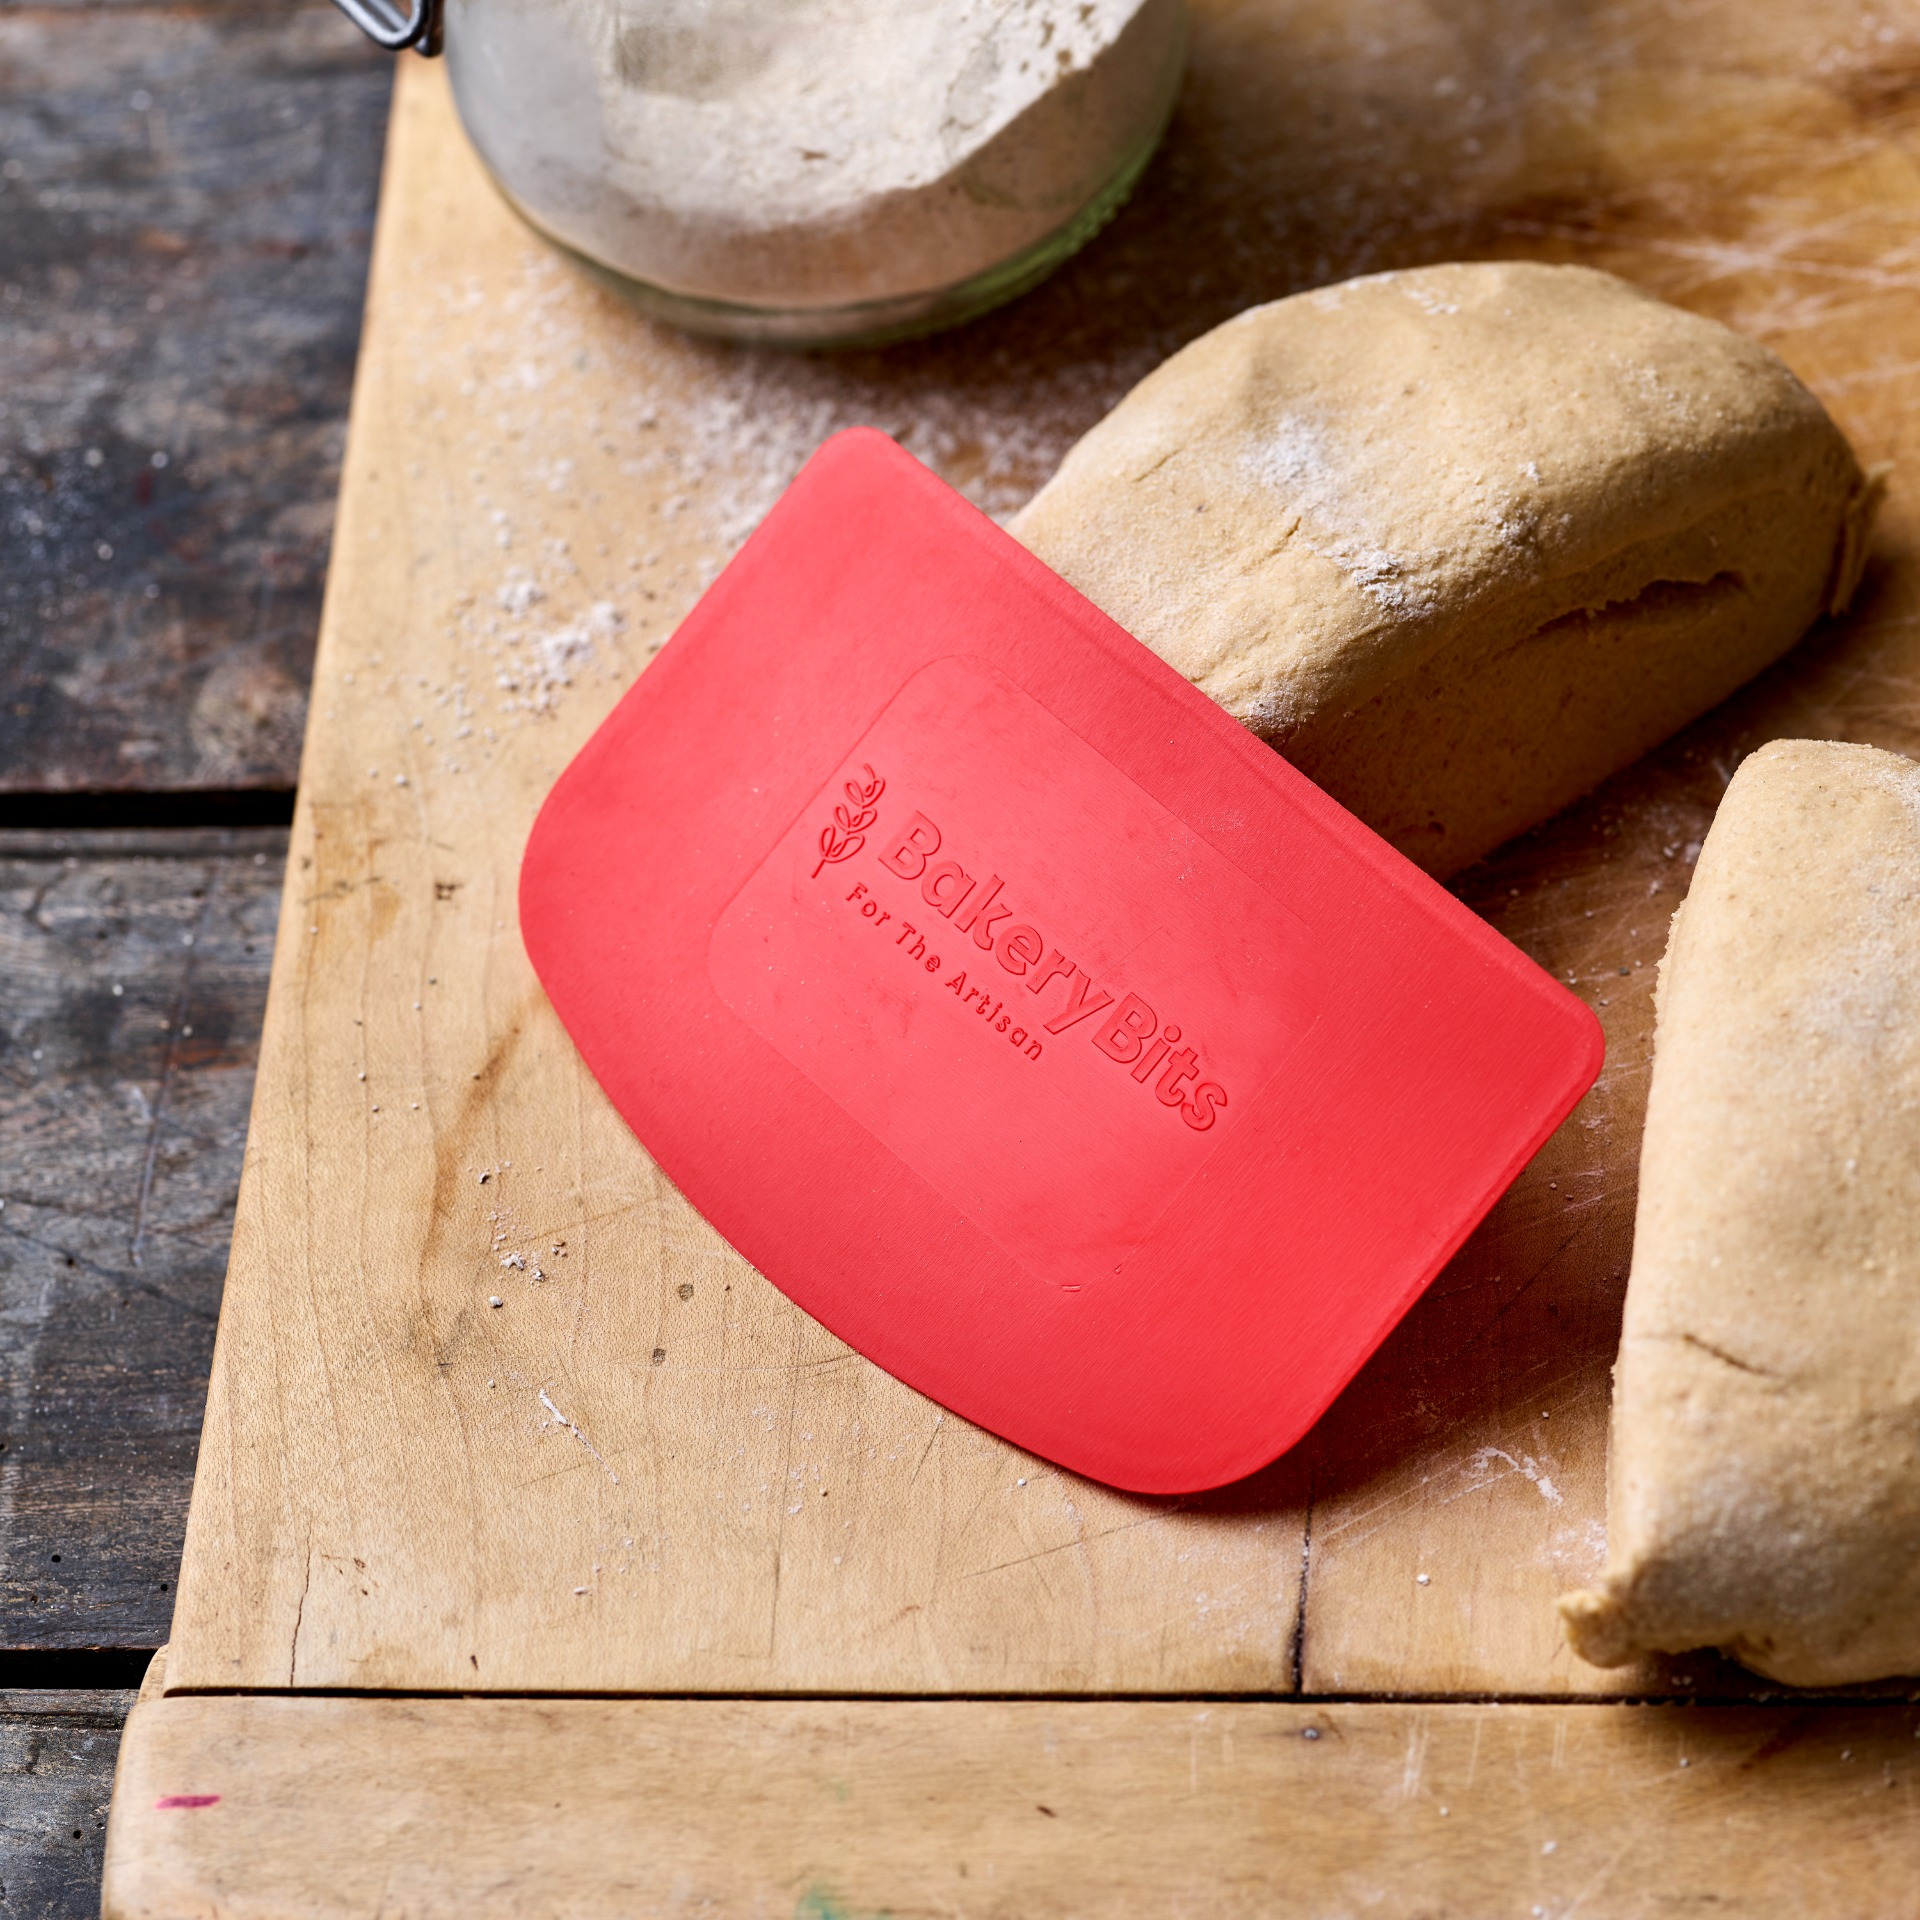 https://www.bakerybits.co.uk/media/catalog/product/cache/0096d319b30710f494afd1fc027ba44c/image/23497bb4/bakerybits-flexible-dough-scraper-red.jpg